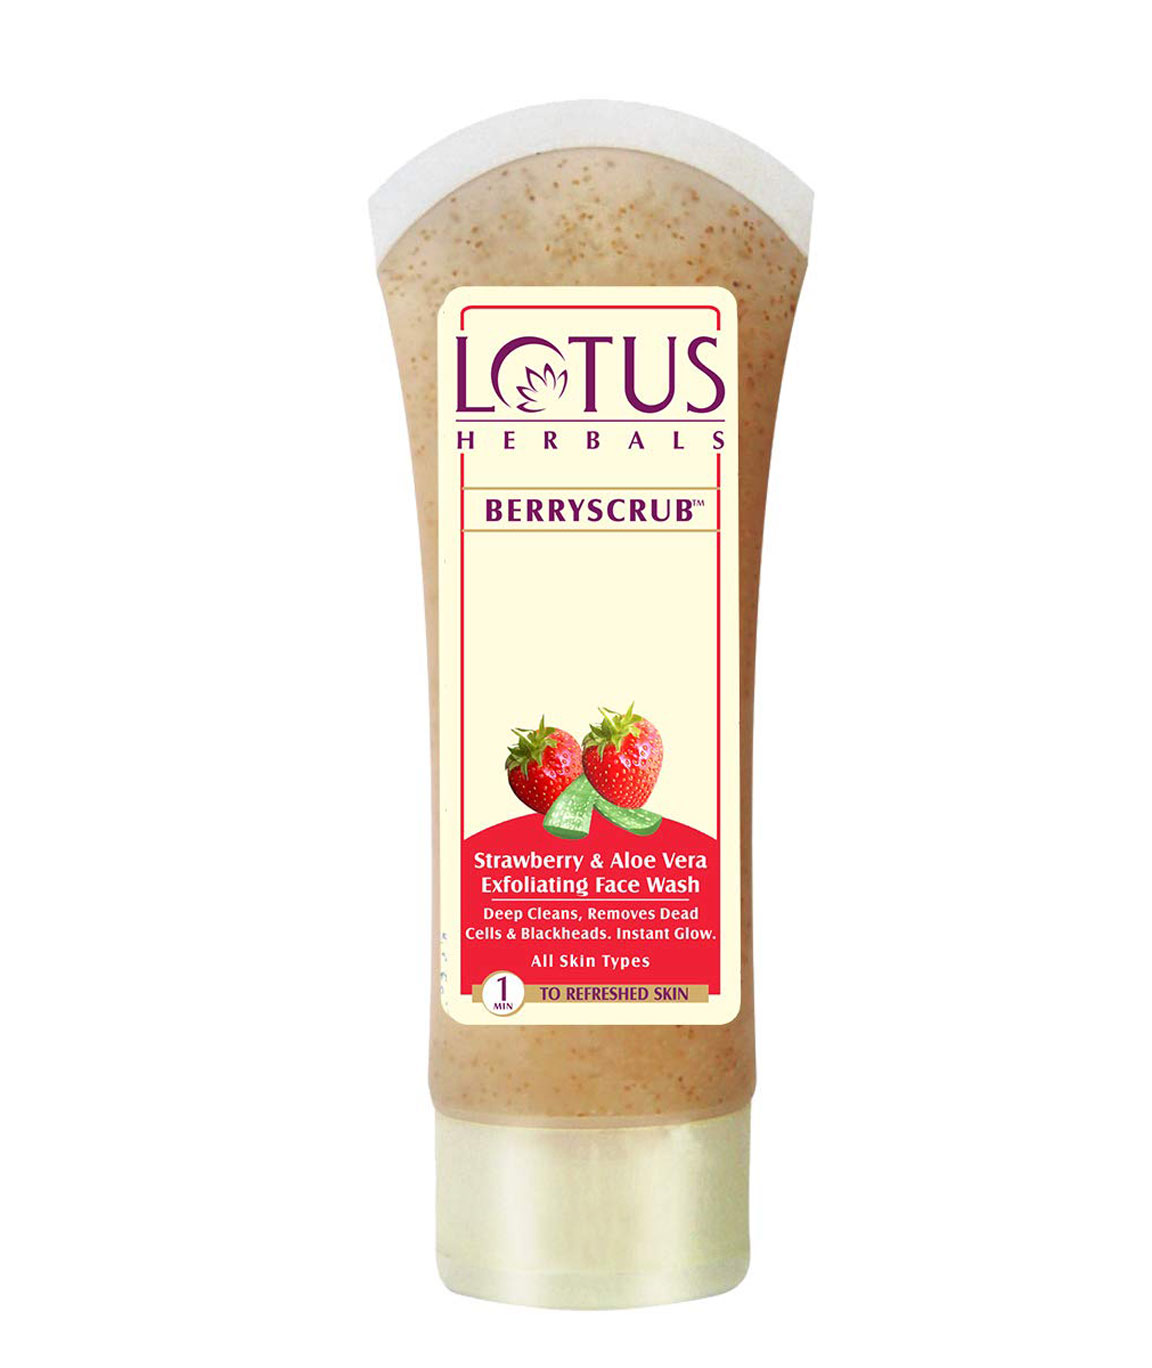 Lotus Herbals Berry Scrub Strawberry And Aloe Vera Exfoliating Face Wash, 120gm